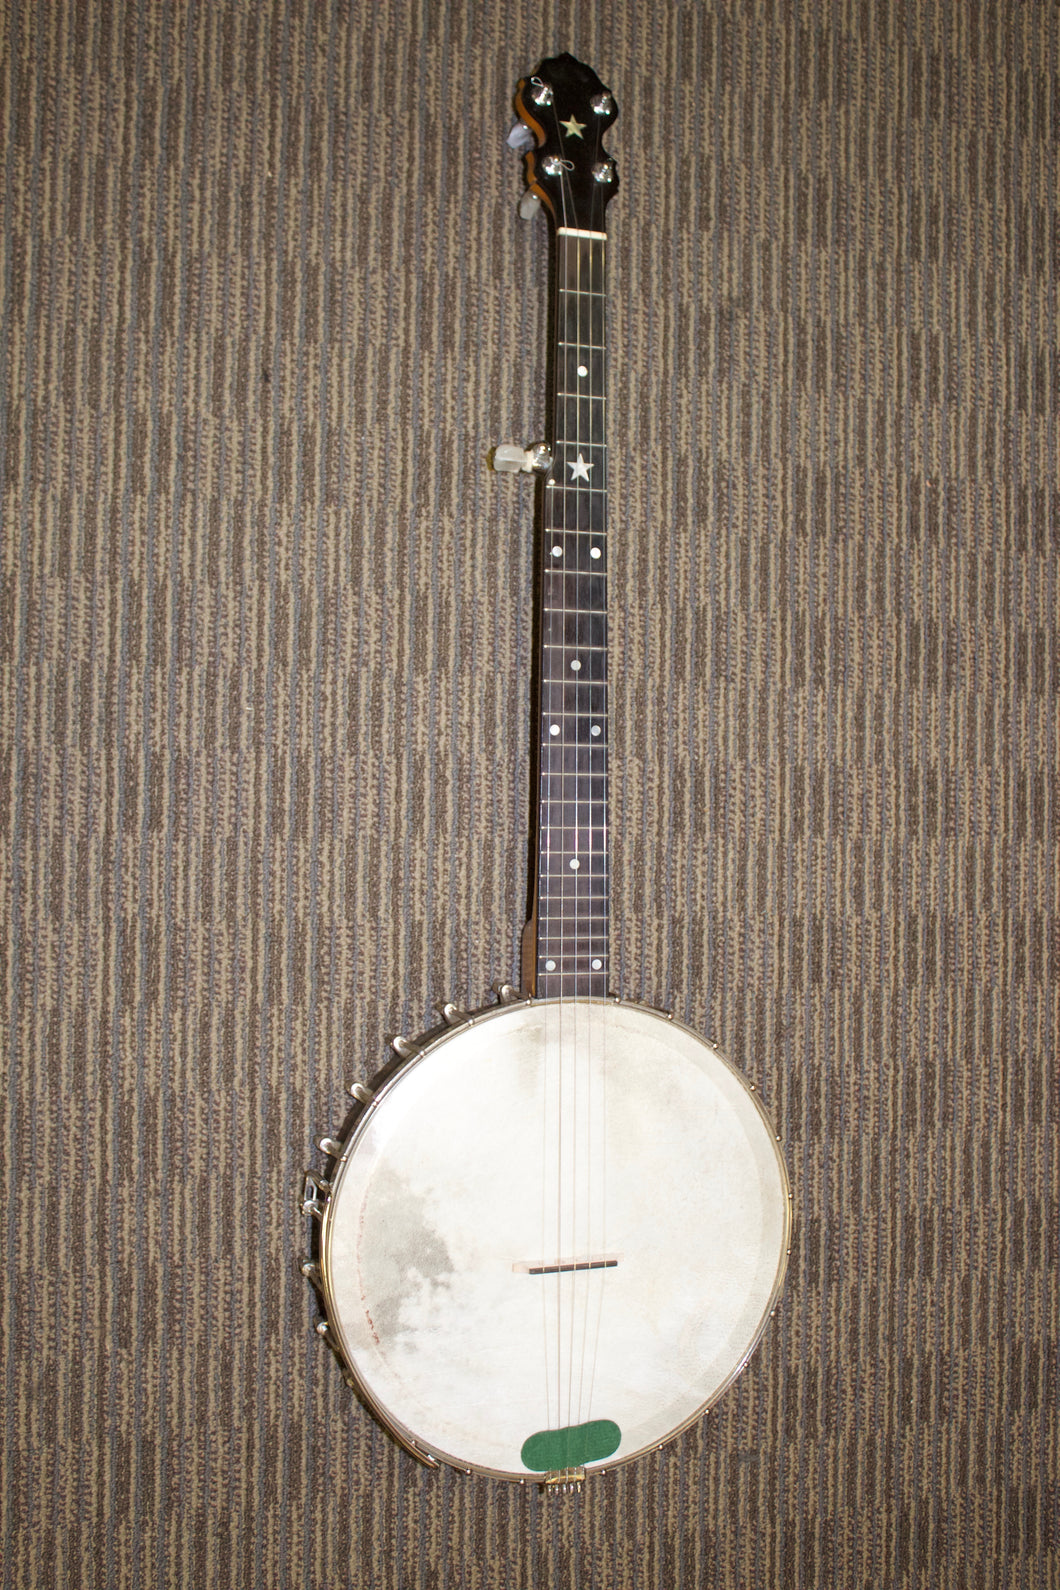 Orpheum 5-String Banjo c. 1920 with modern neck